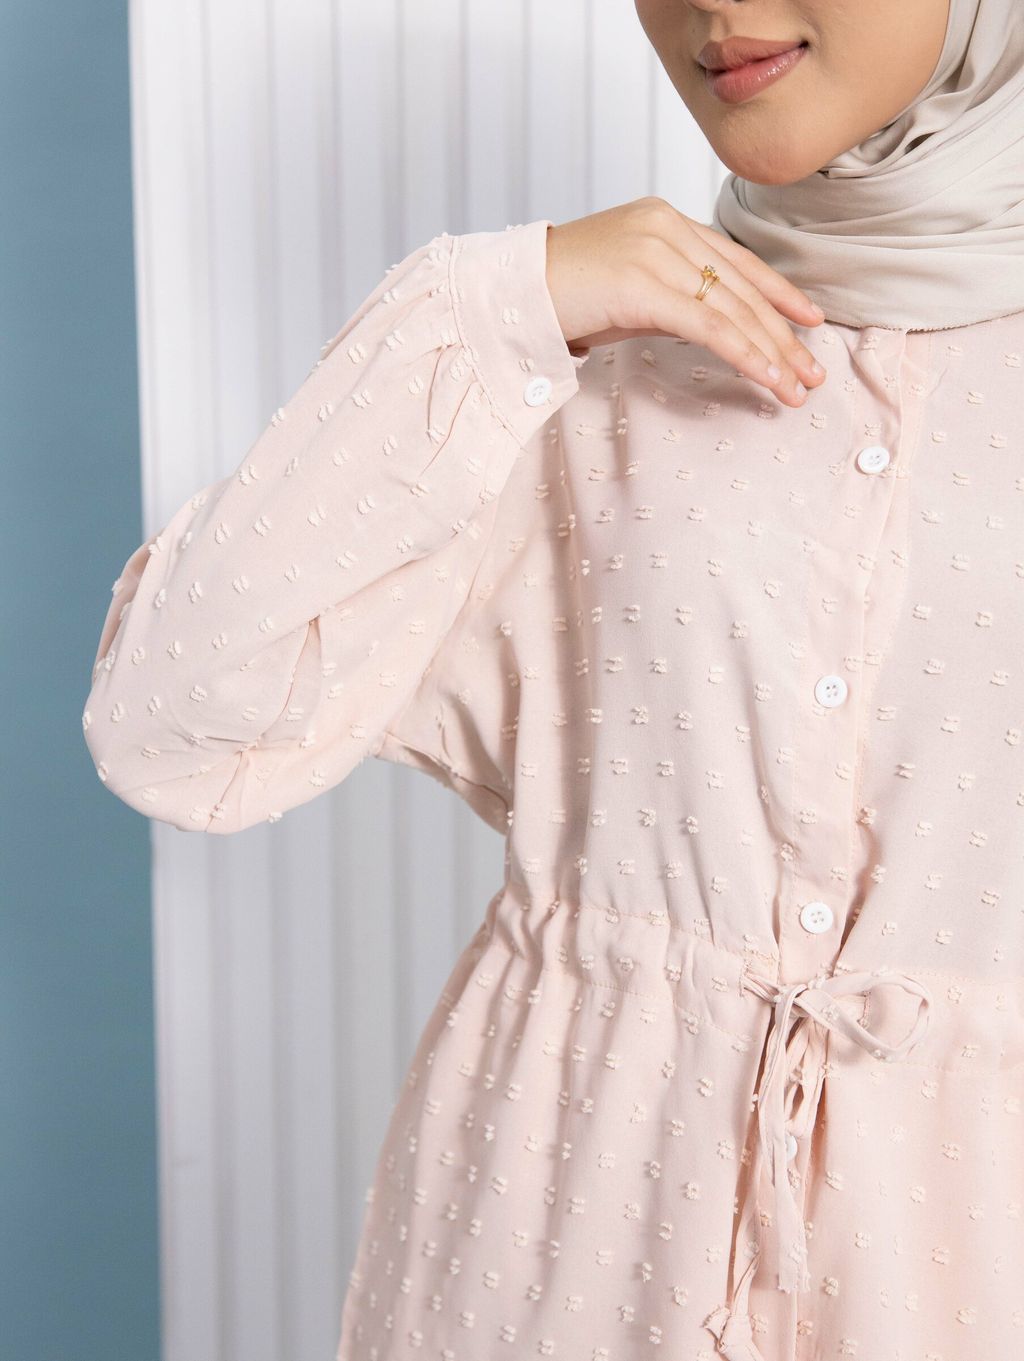 haura-wear-cotton-baju-muslimah-set-seluar-suit-muslimah-set-baju-dan-seluar-muslimah-skirt (10).jpg